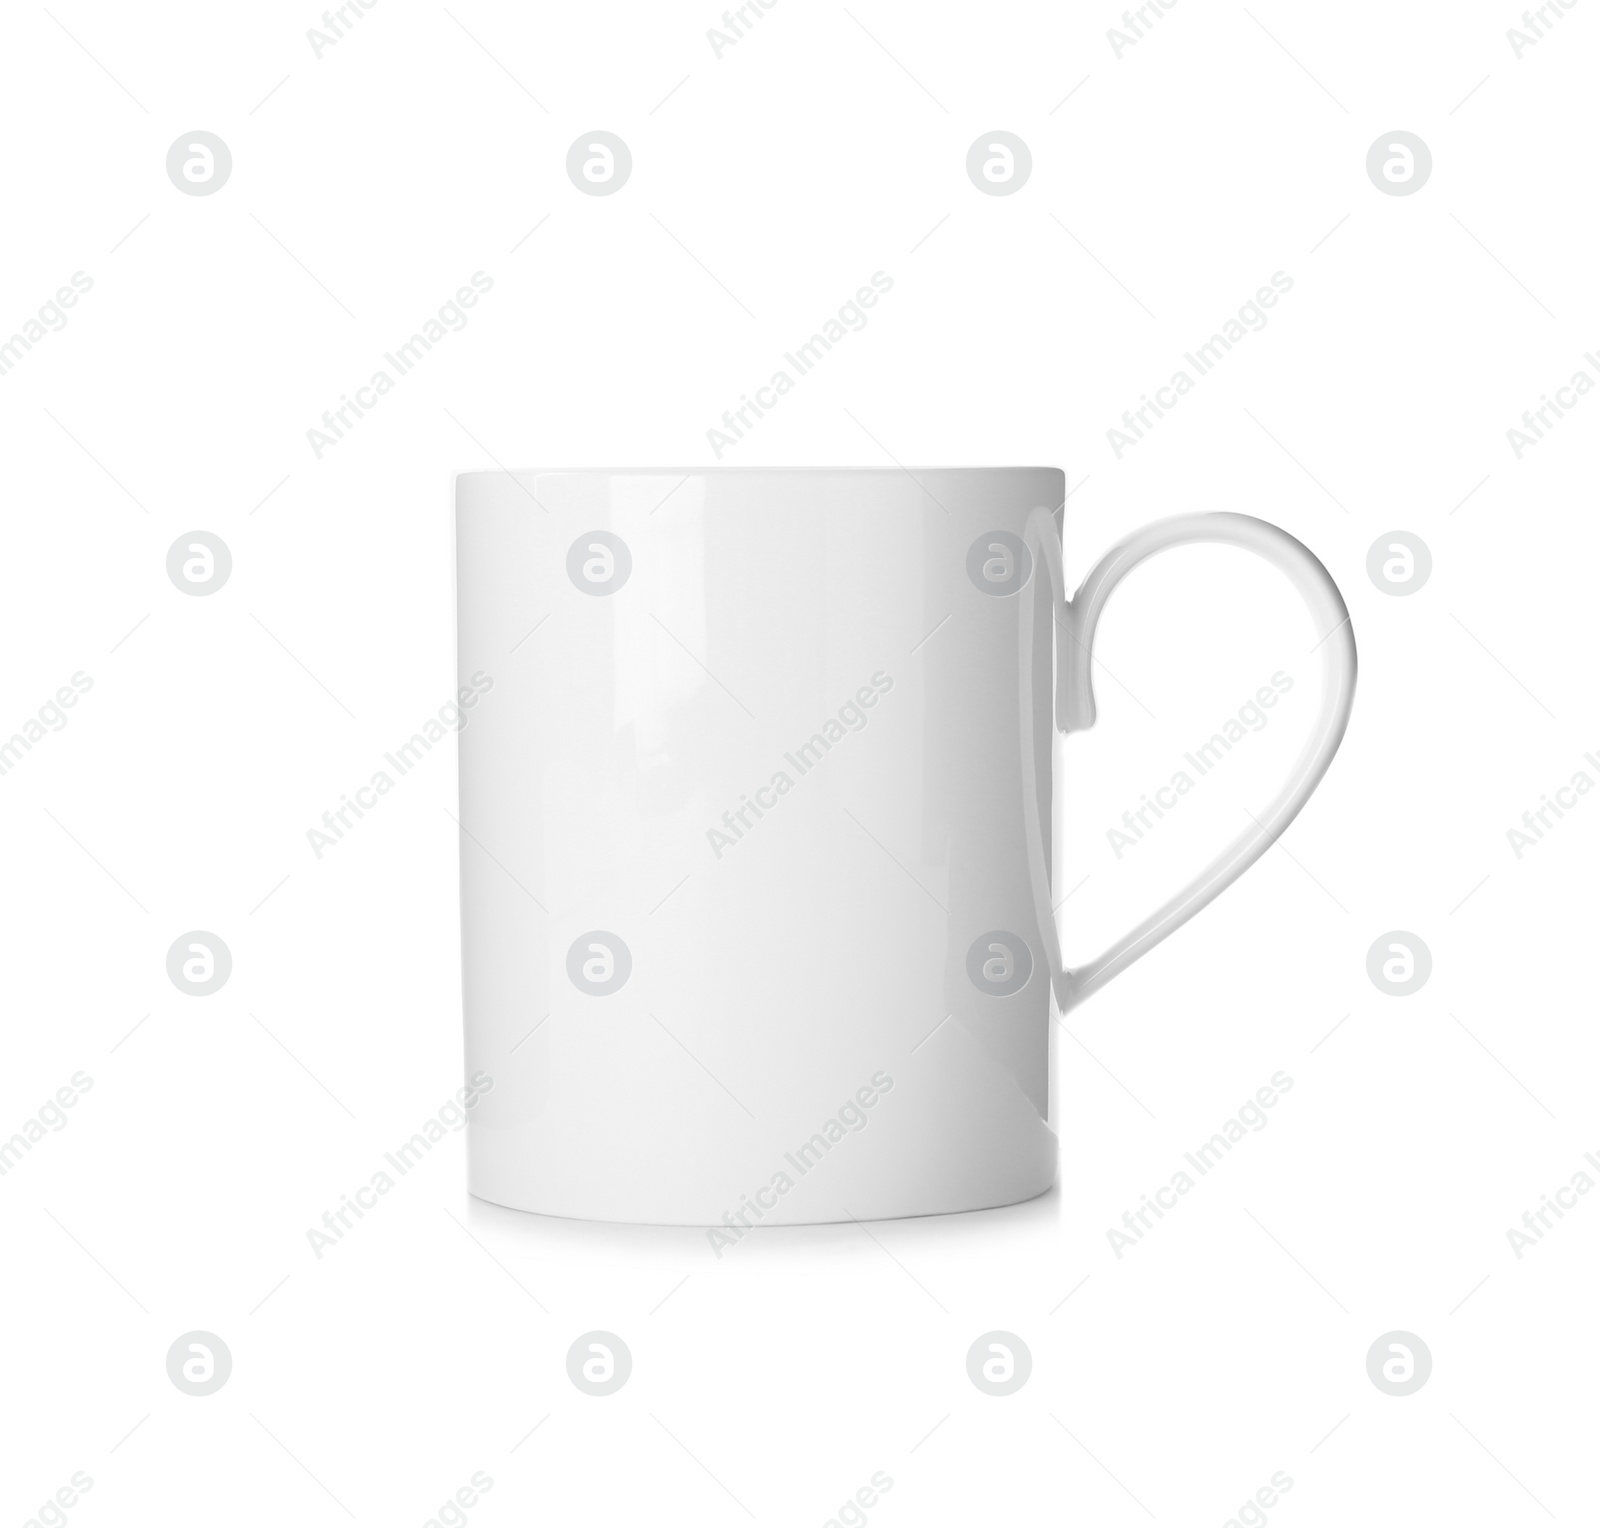 Photo of Stylish empty ceramic cup isolated on white